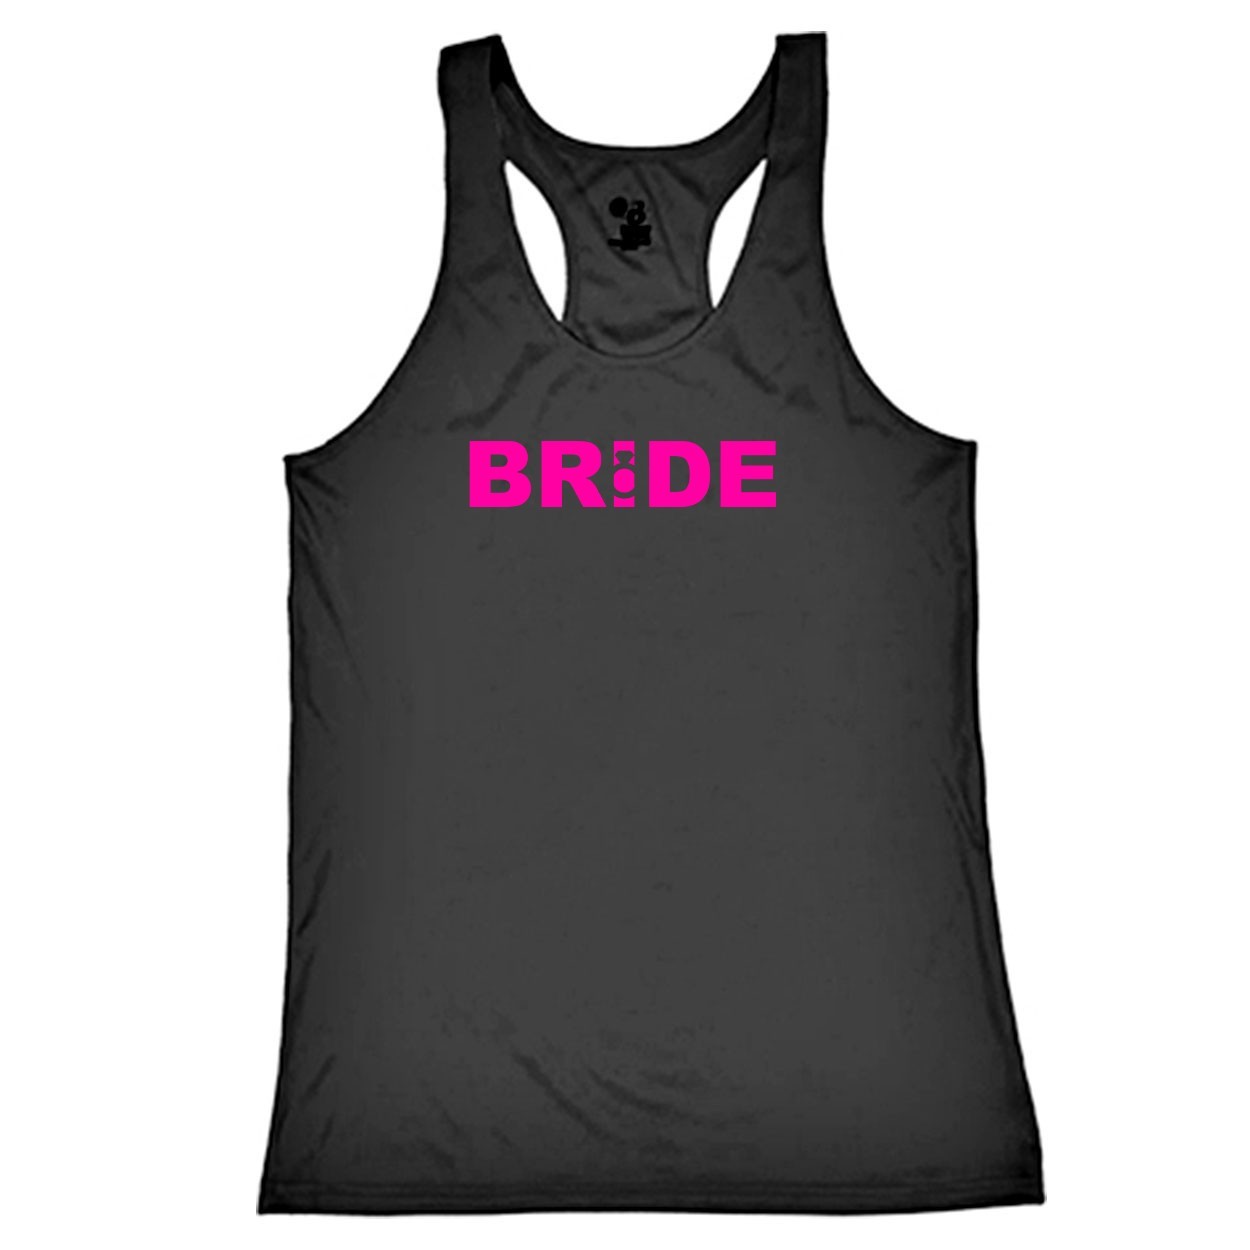 Bride Ring Logo Classic Youth Girls Performance Racerback Tank Top Black (Pink Logo)